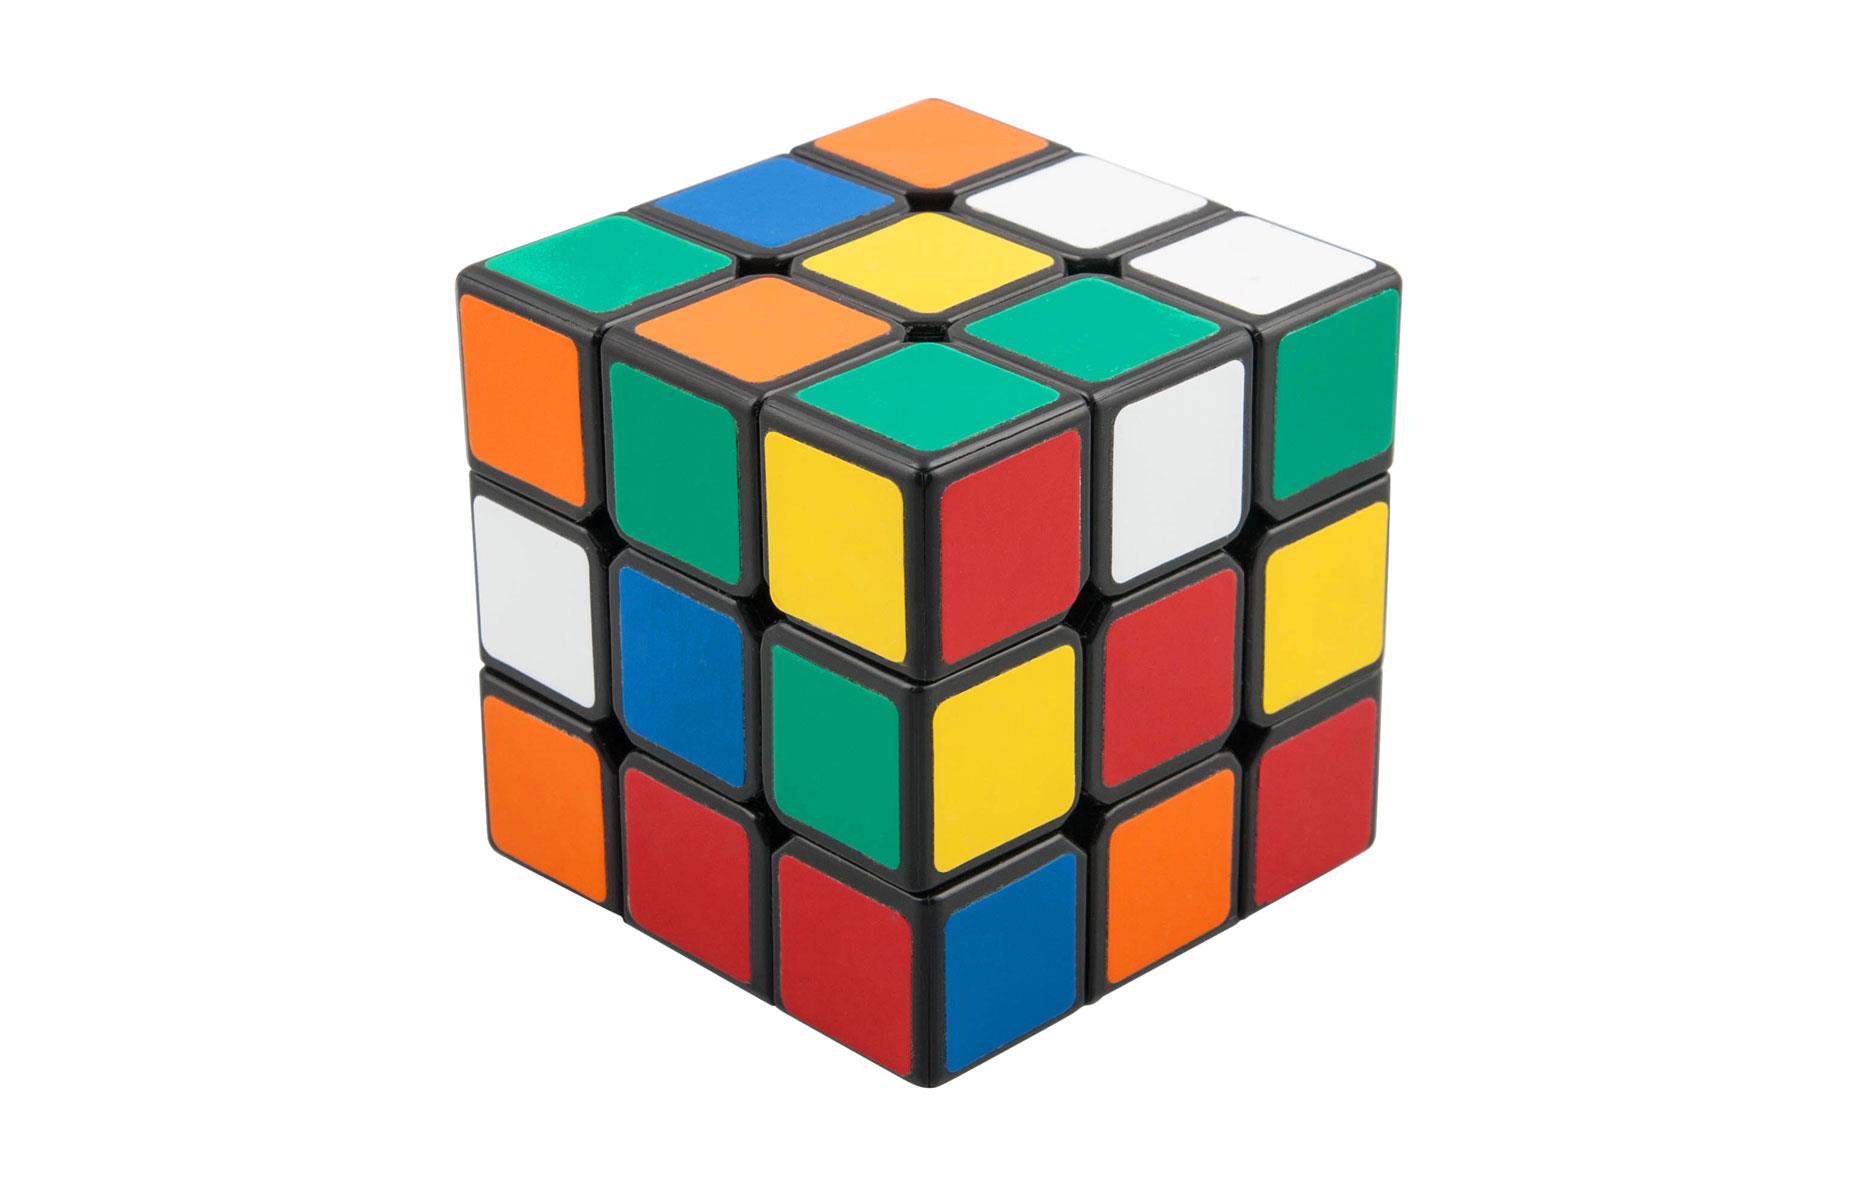 1980s: Rubik's Cube